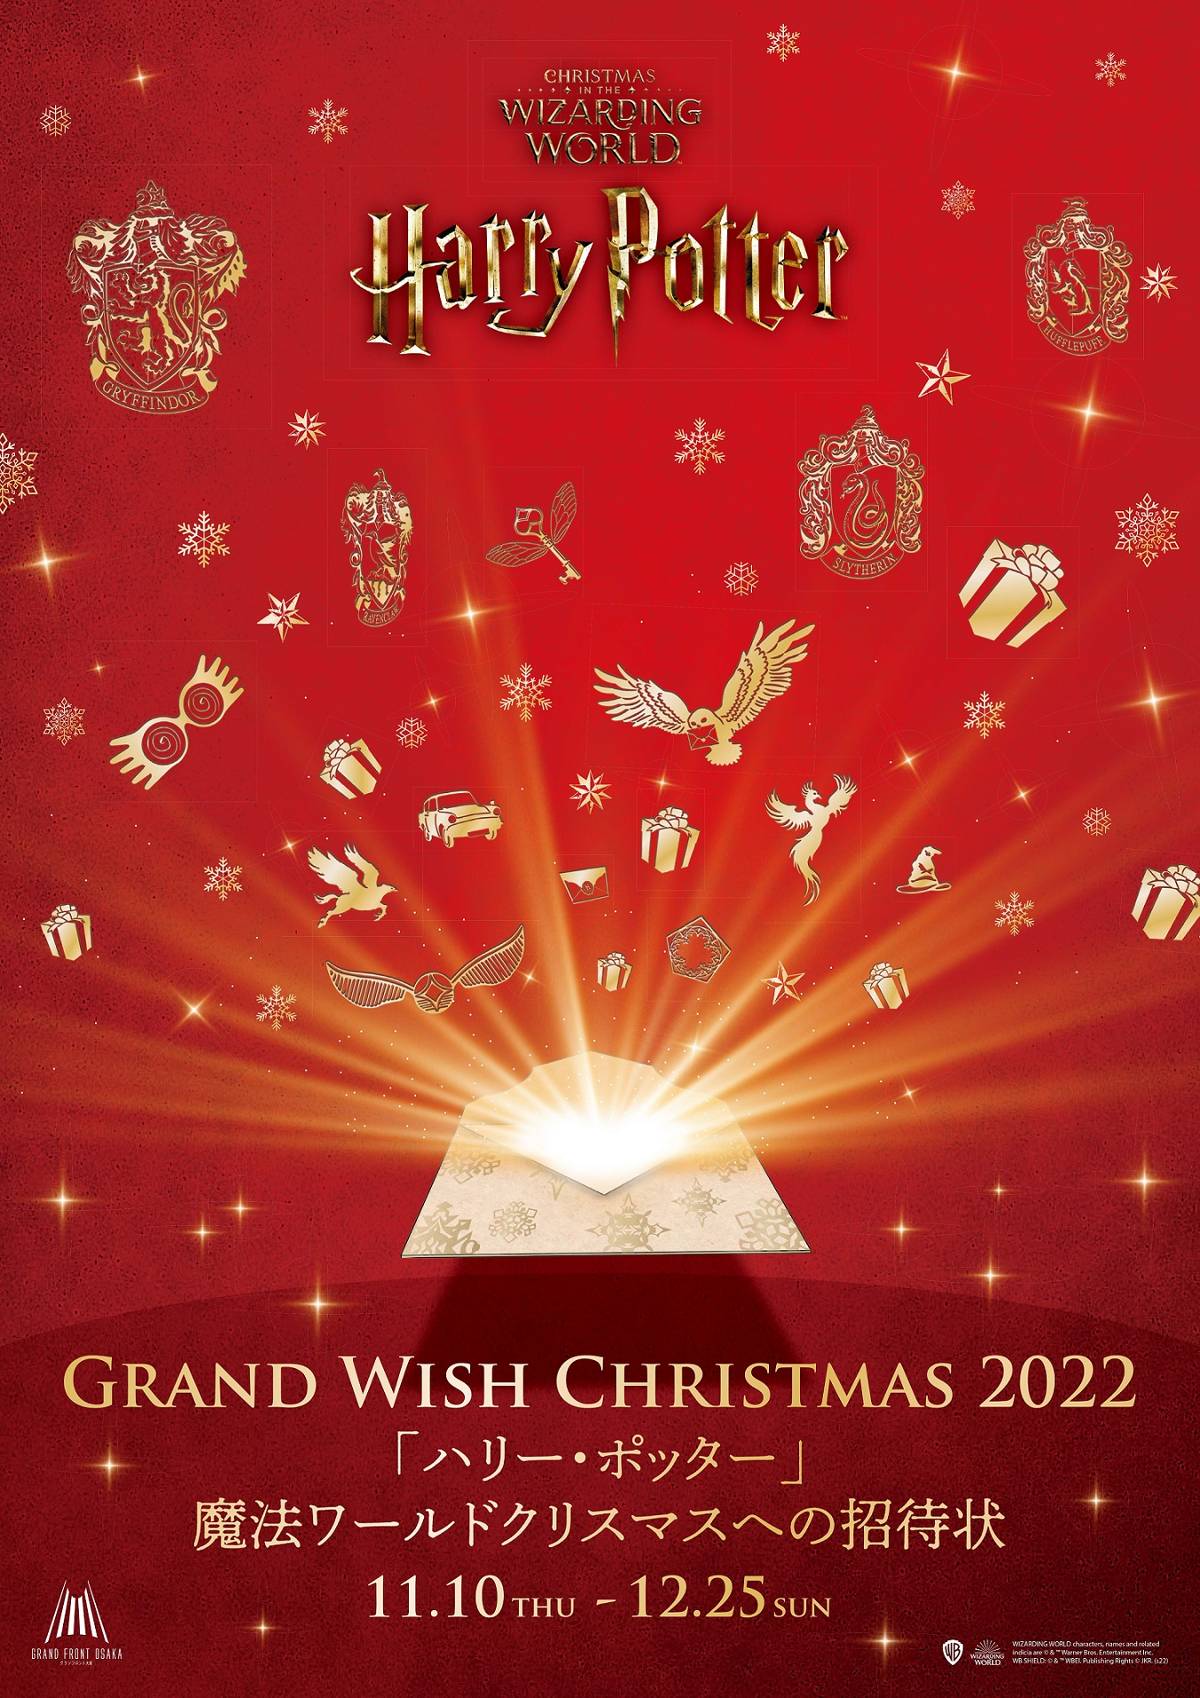 Grand Wish Christmas 2022～「ハリー・ポッター」魔法ワールドクリスマスへの招待状～